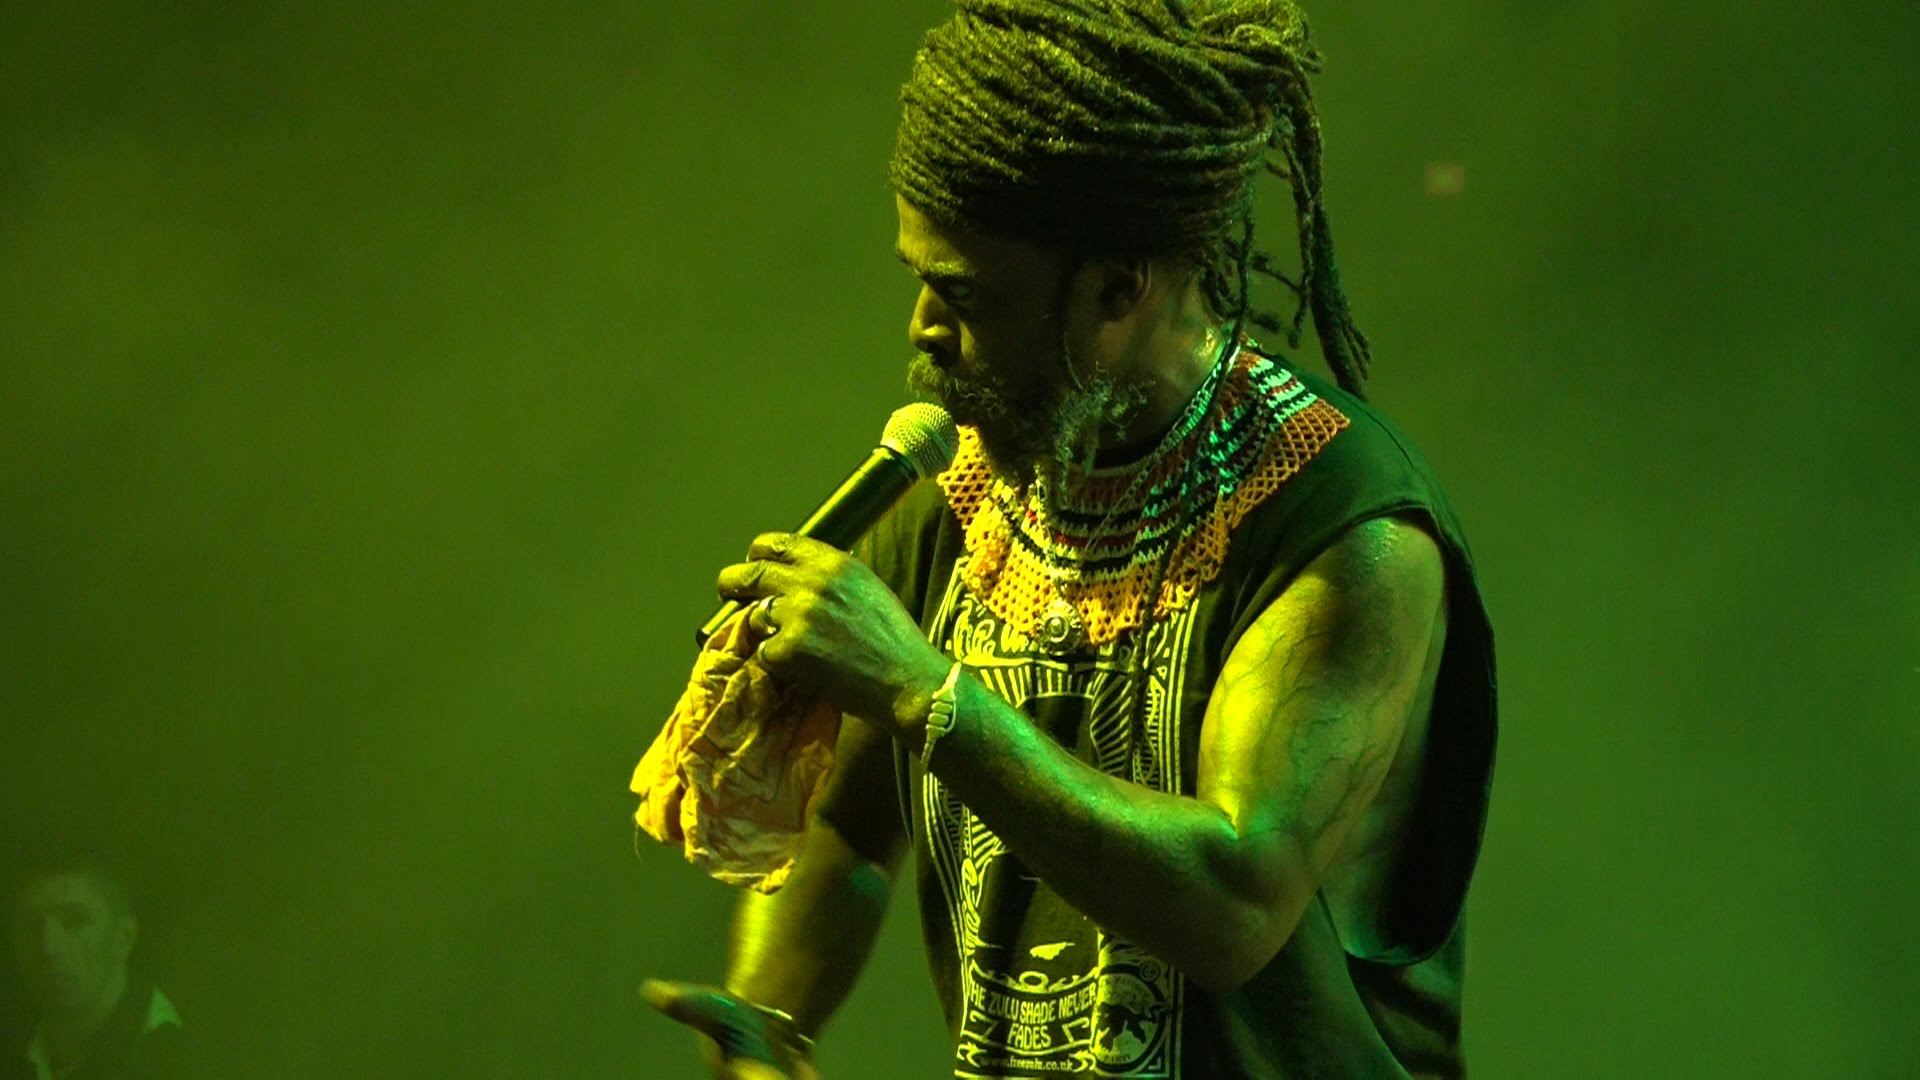 Ghetto Priest & Positive Thursdays In Dub - Babylon Queendom @ Reggae Nad Wartą 2014 [7/26/2014]